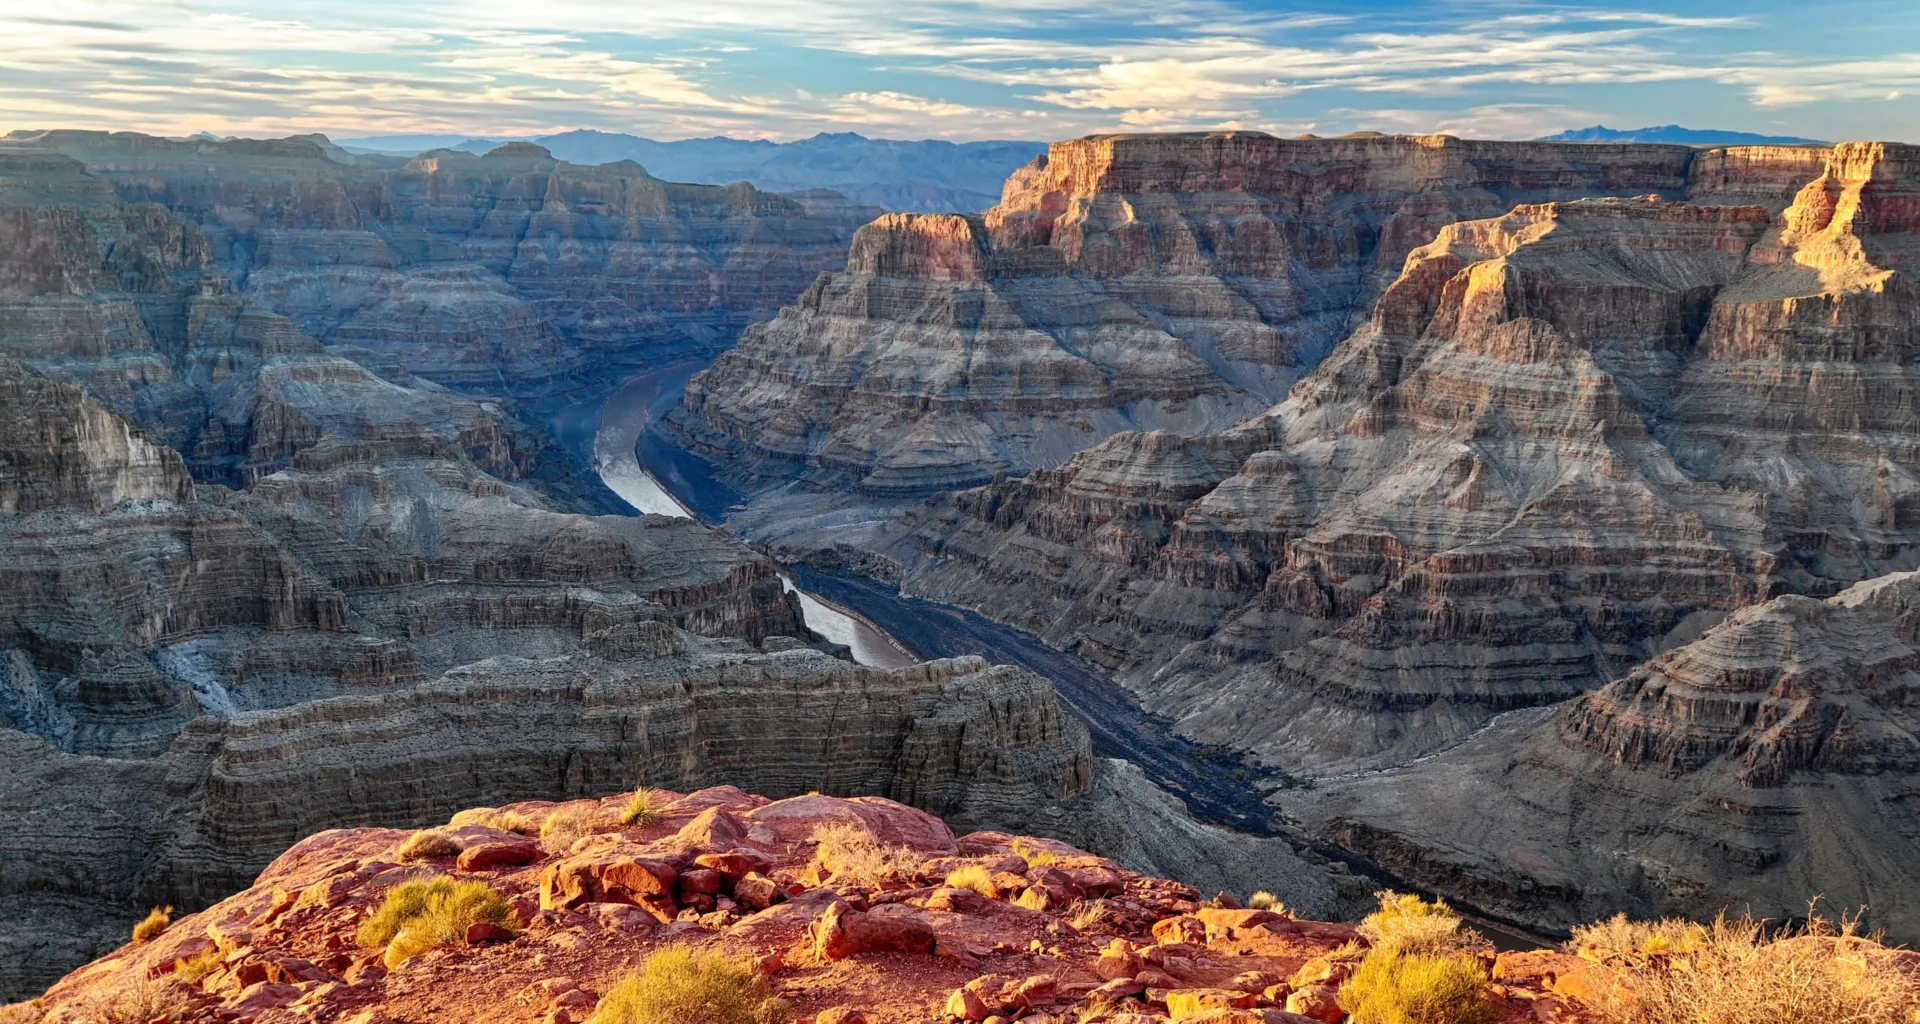 hotels where to stay grand canyon arizona